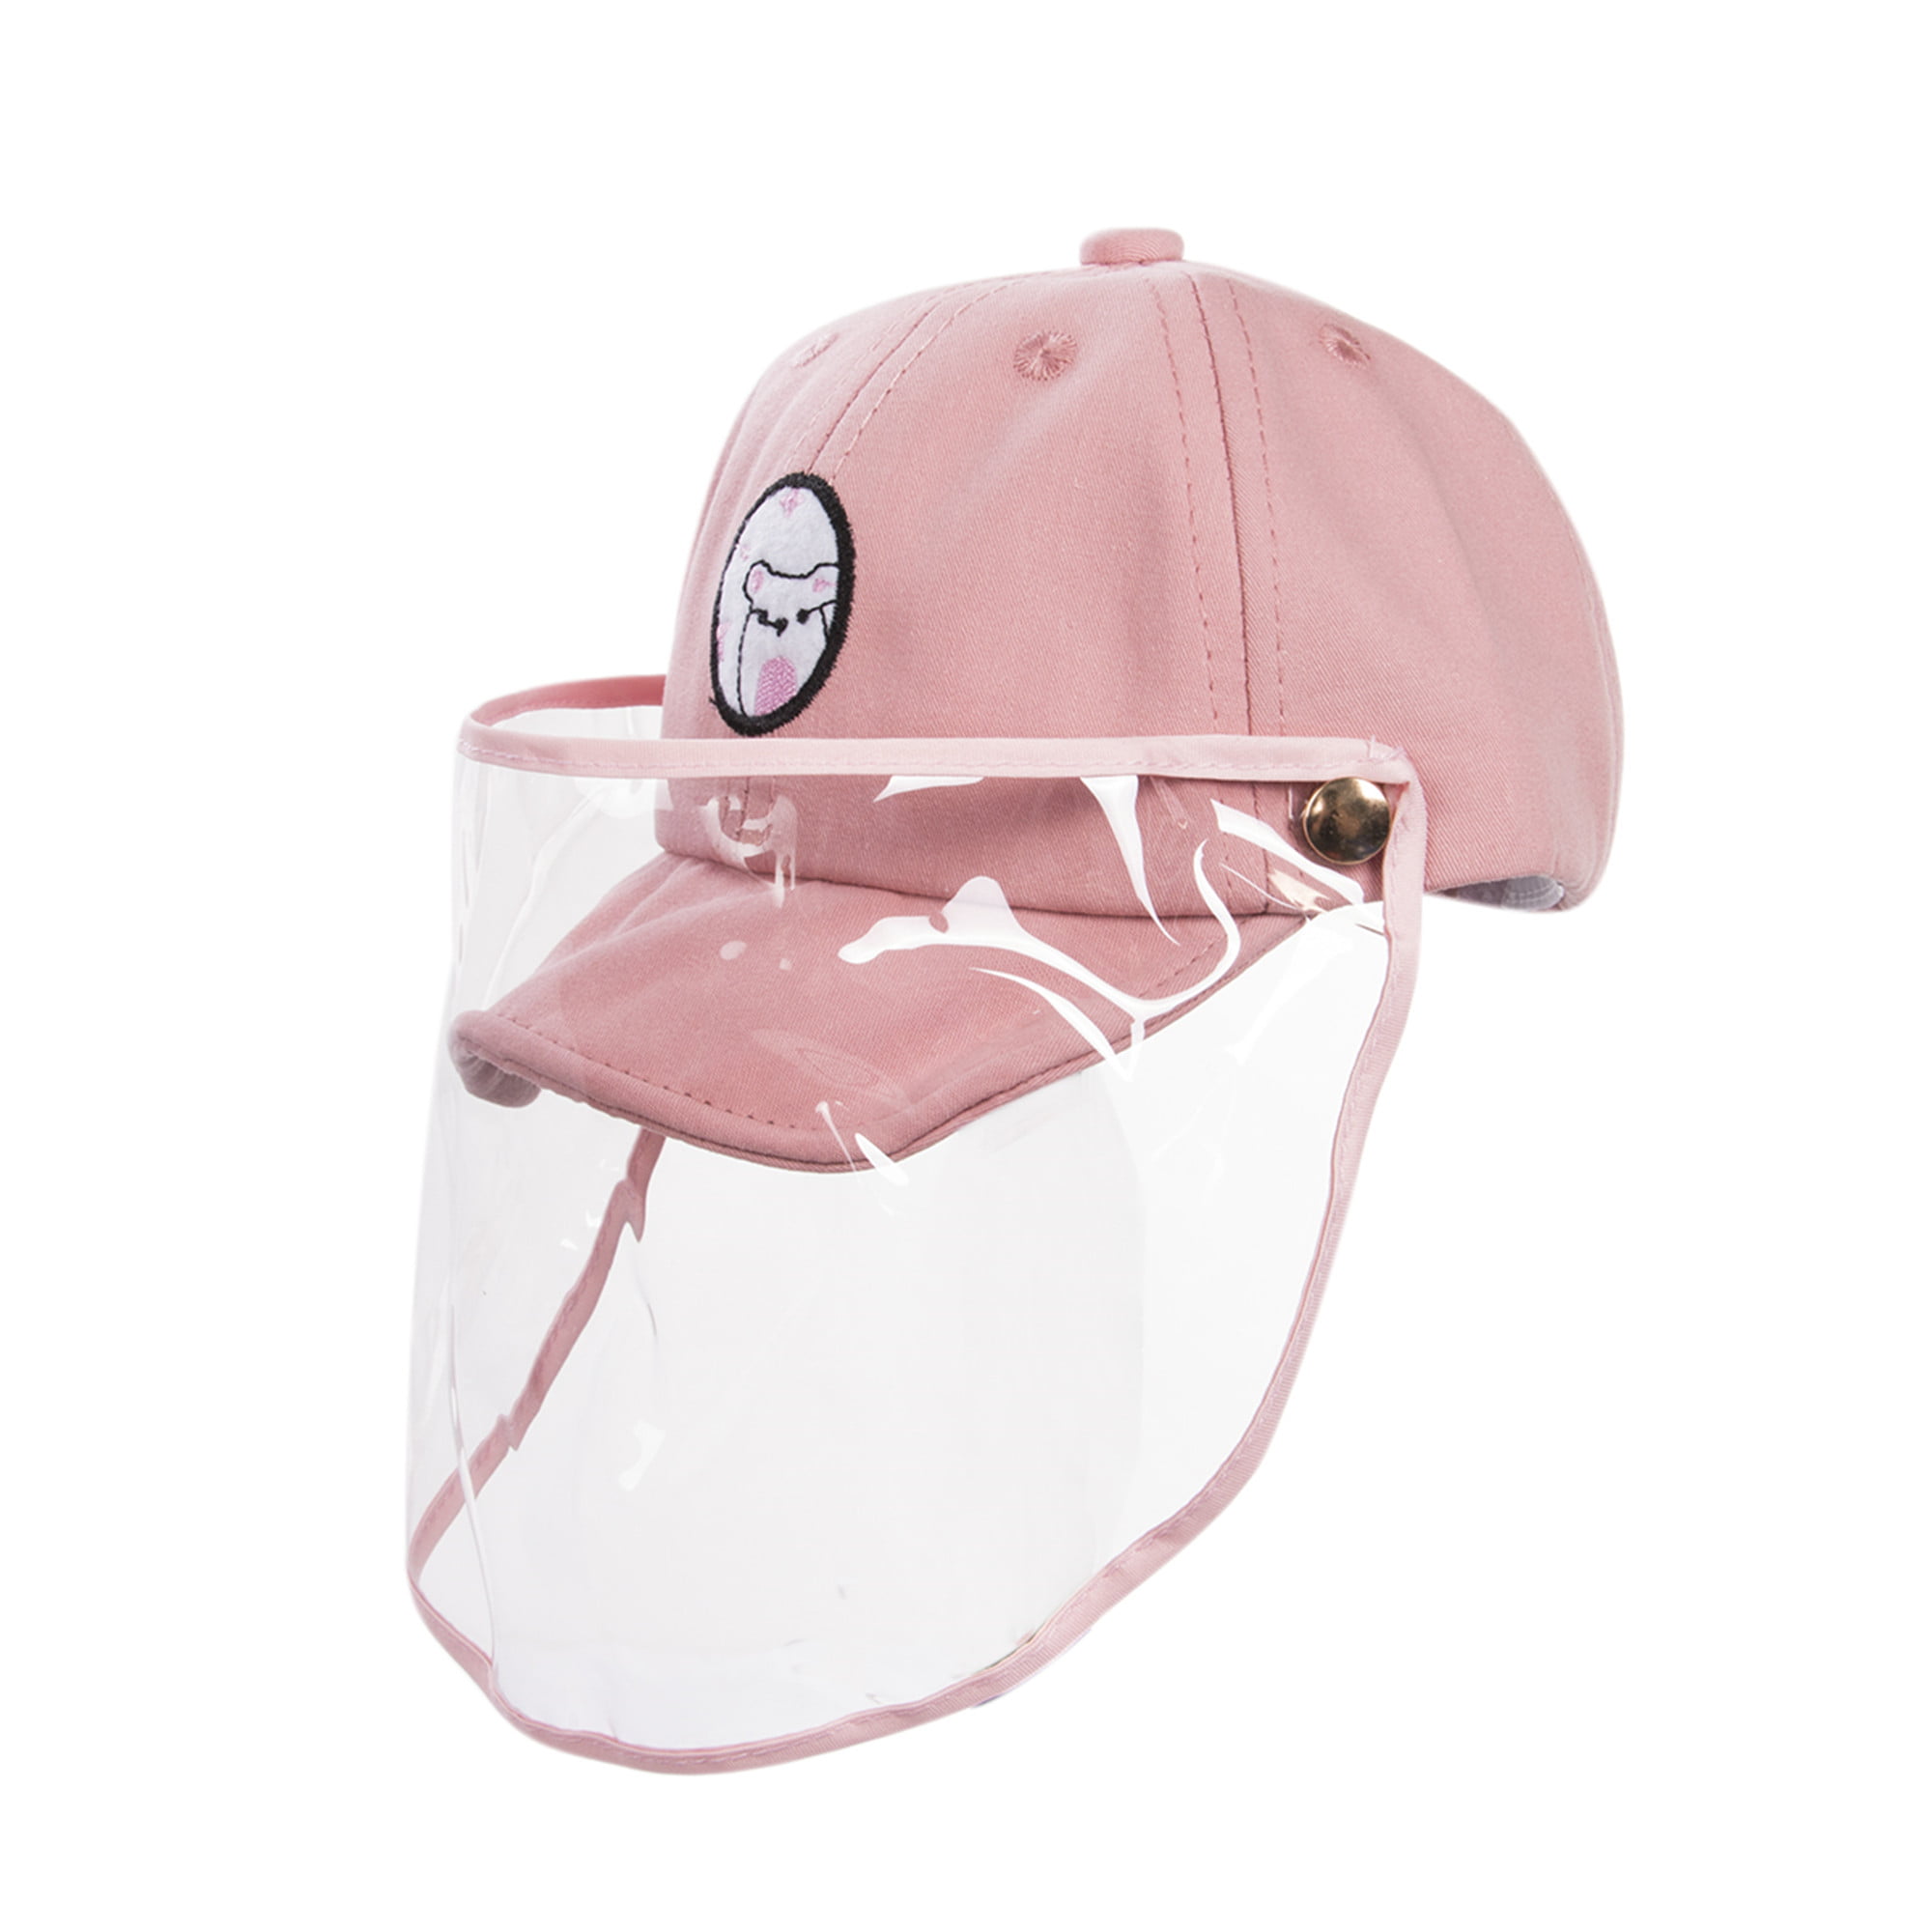 Kids Cartoon Baseball Cap Safety Full Face Cover Protect Shield Anti-Saliva Hat 